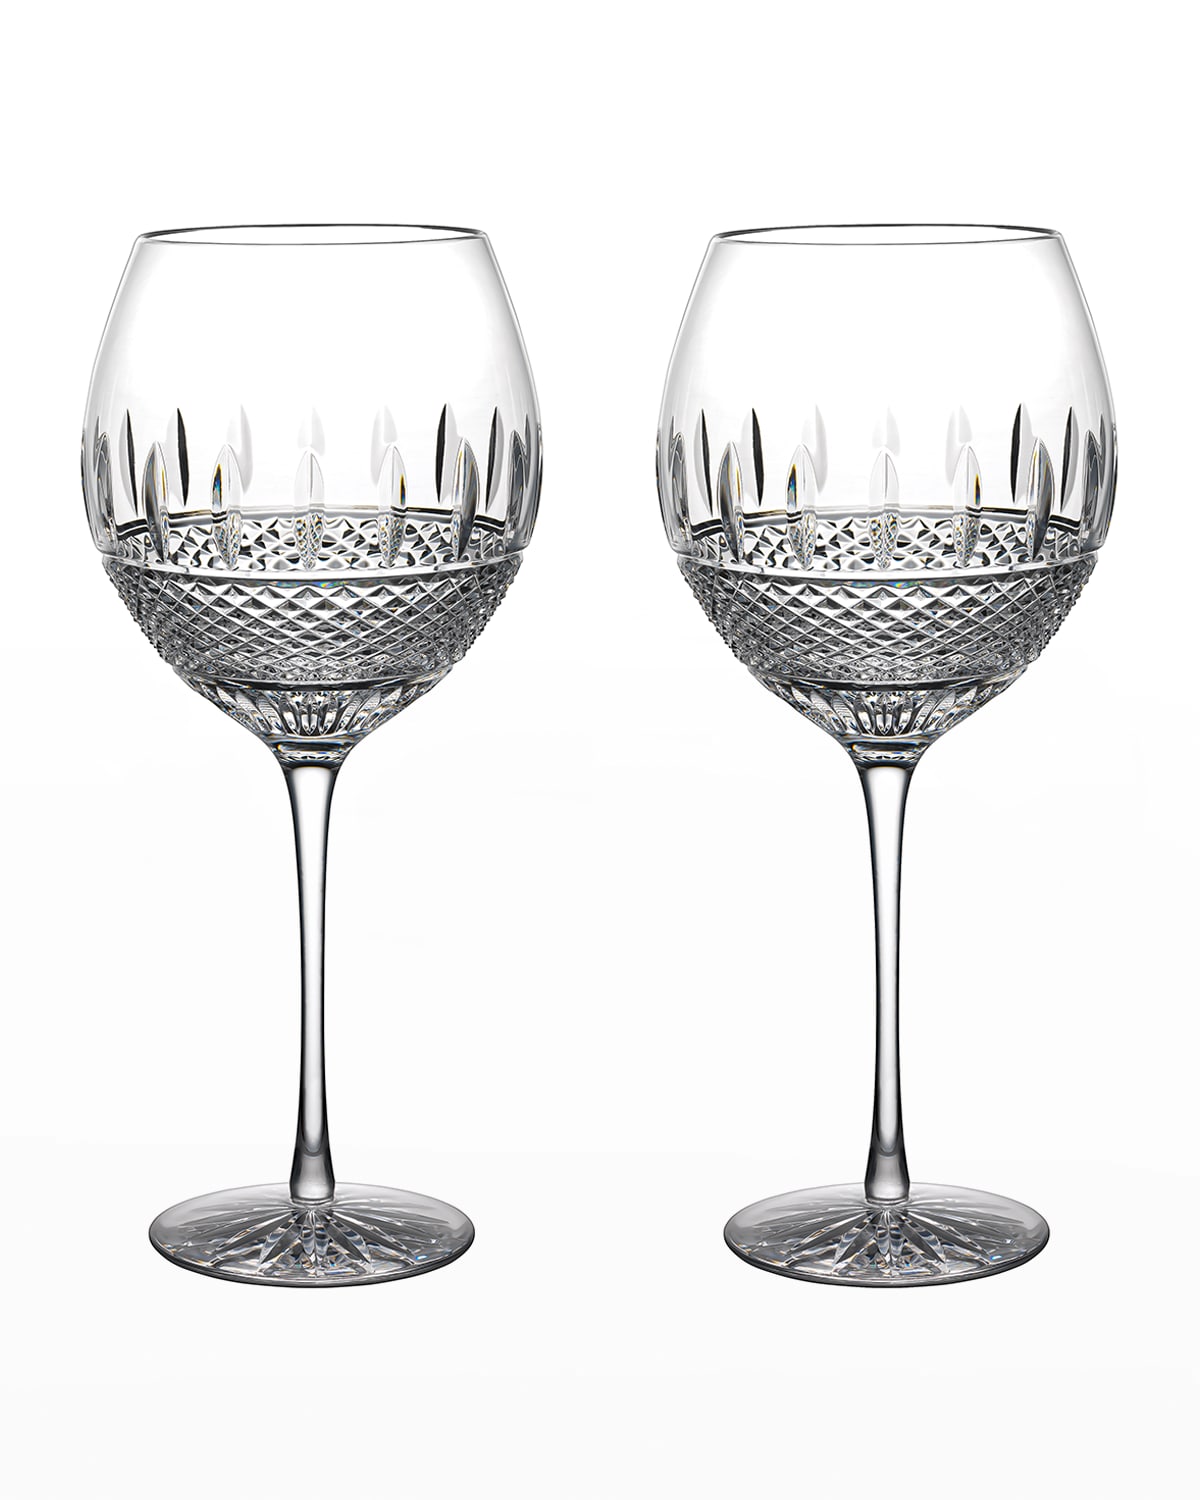 Bernadotte red wine glasses in lead-free crystal